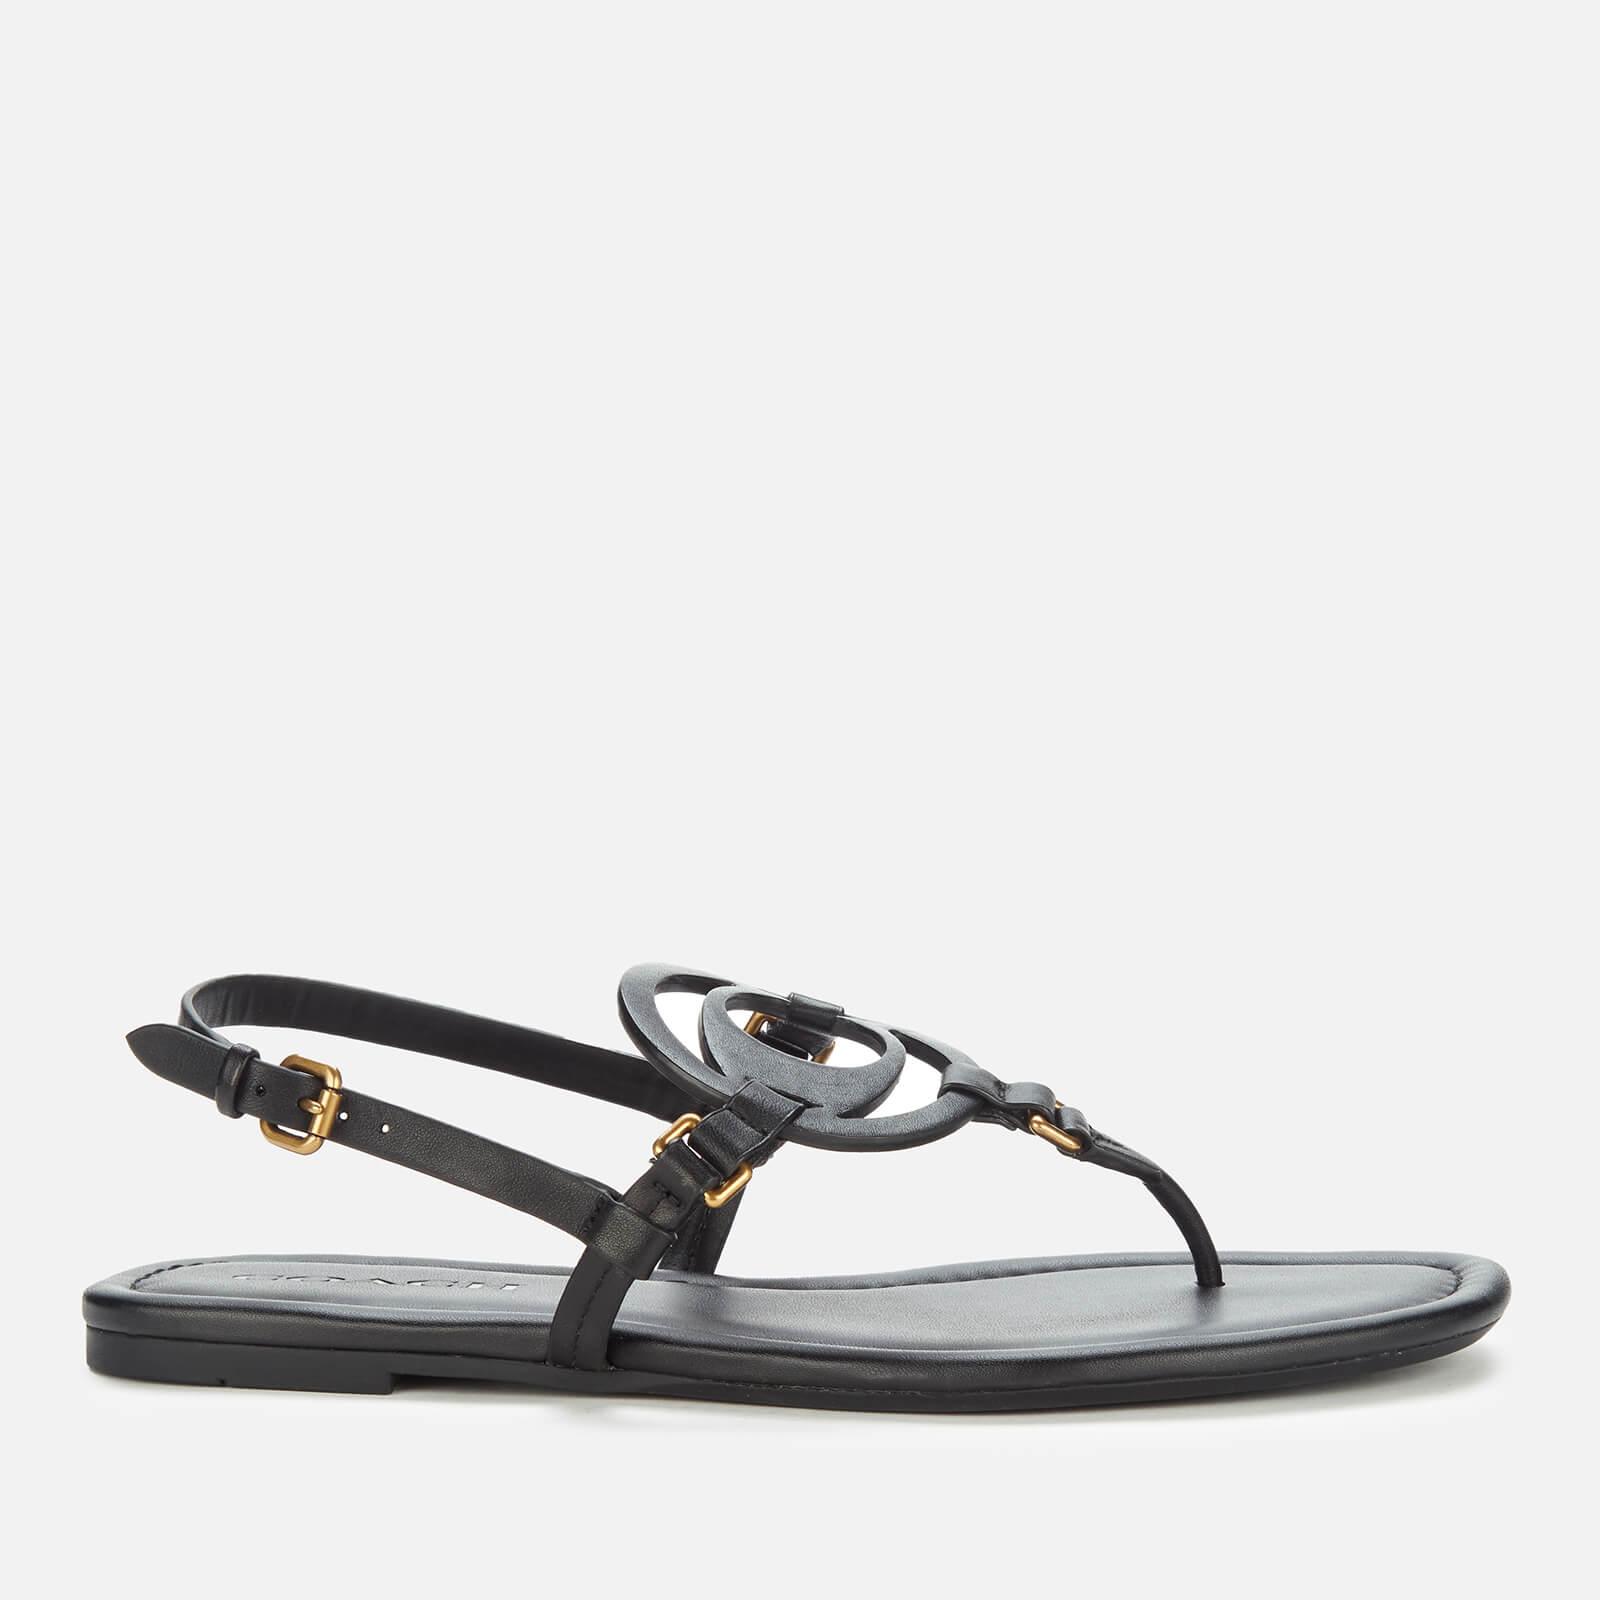 COACH Jeri Leather Toe Post Sandals in Black - Lyst